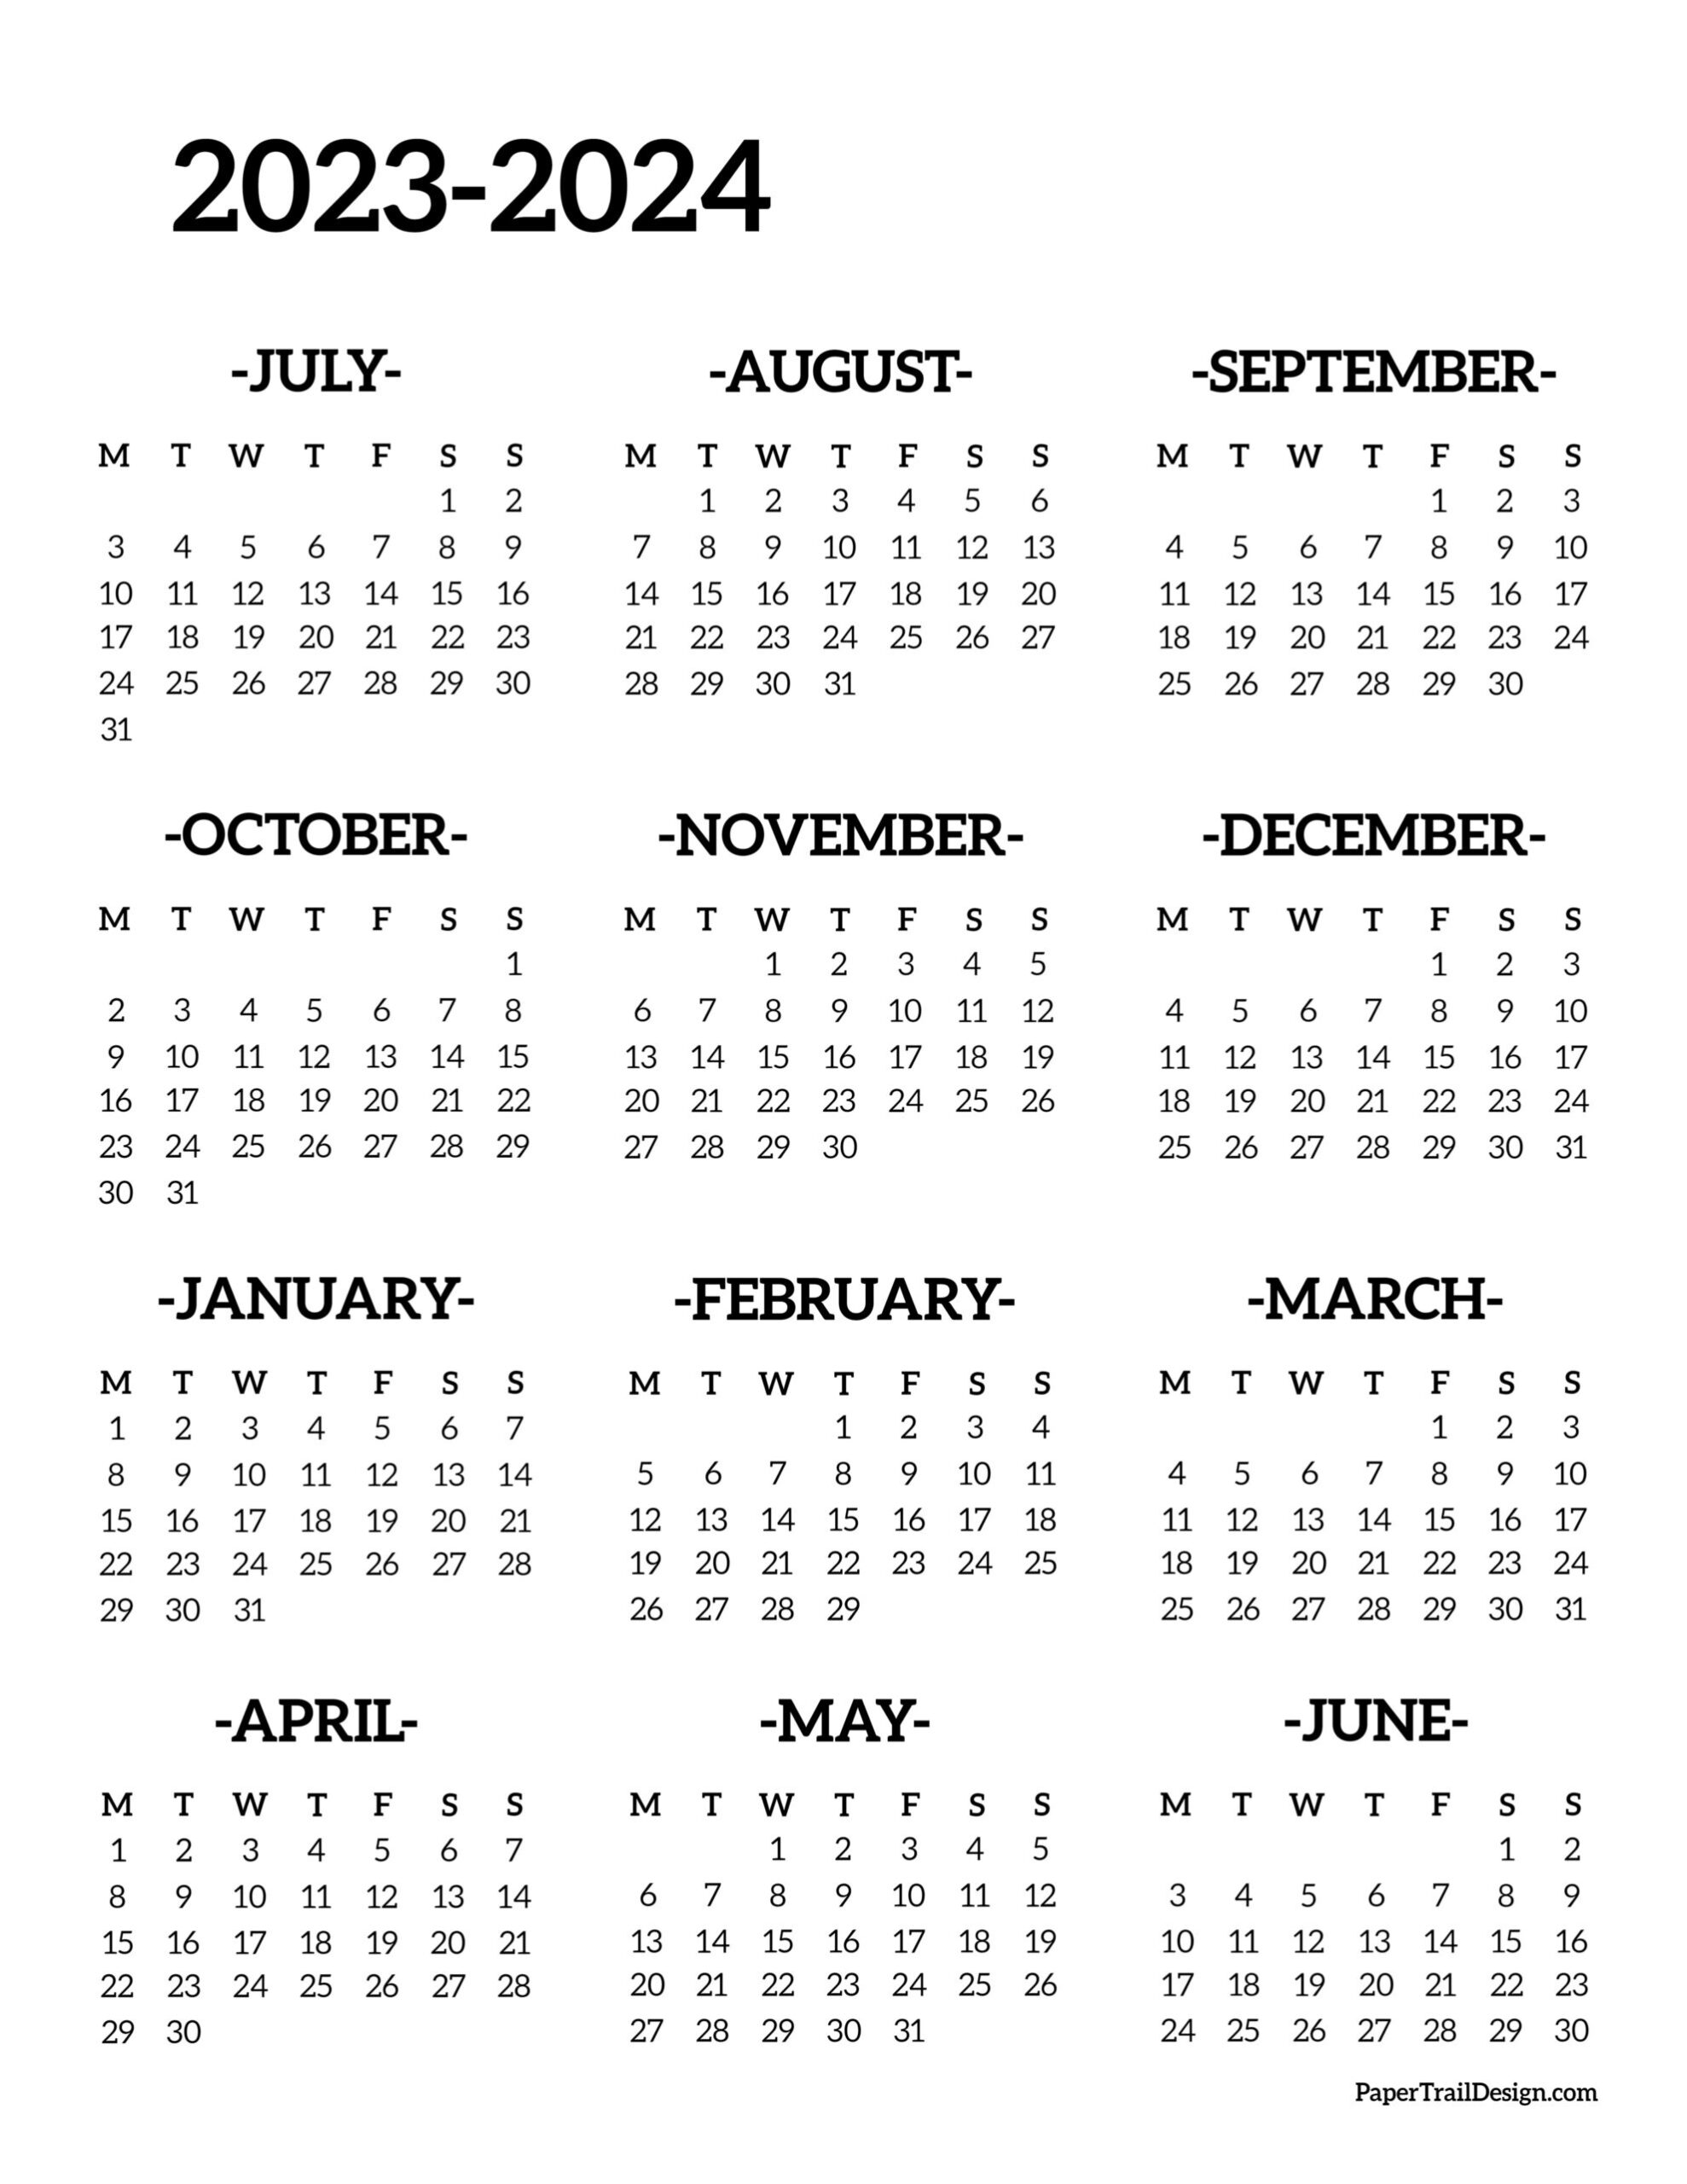 2023-2024 School Year Calendar Free Printable - Paper Trail Design throughout June 2023 - May 2024 Calendar